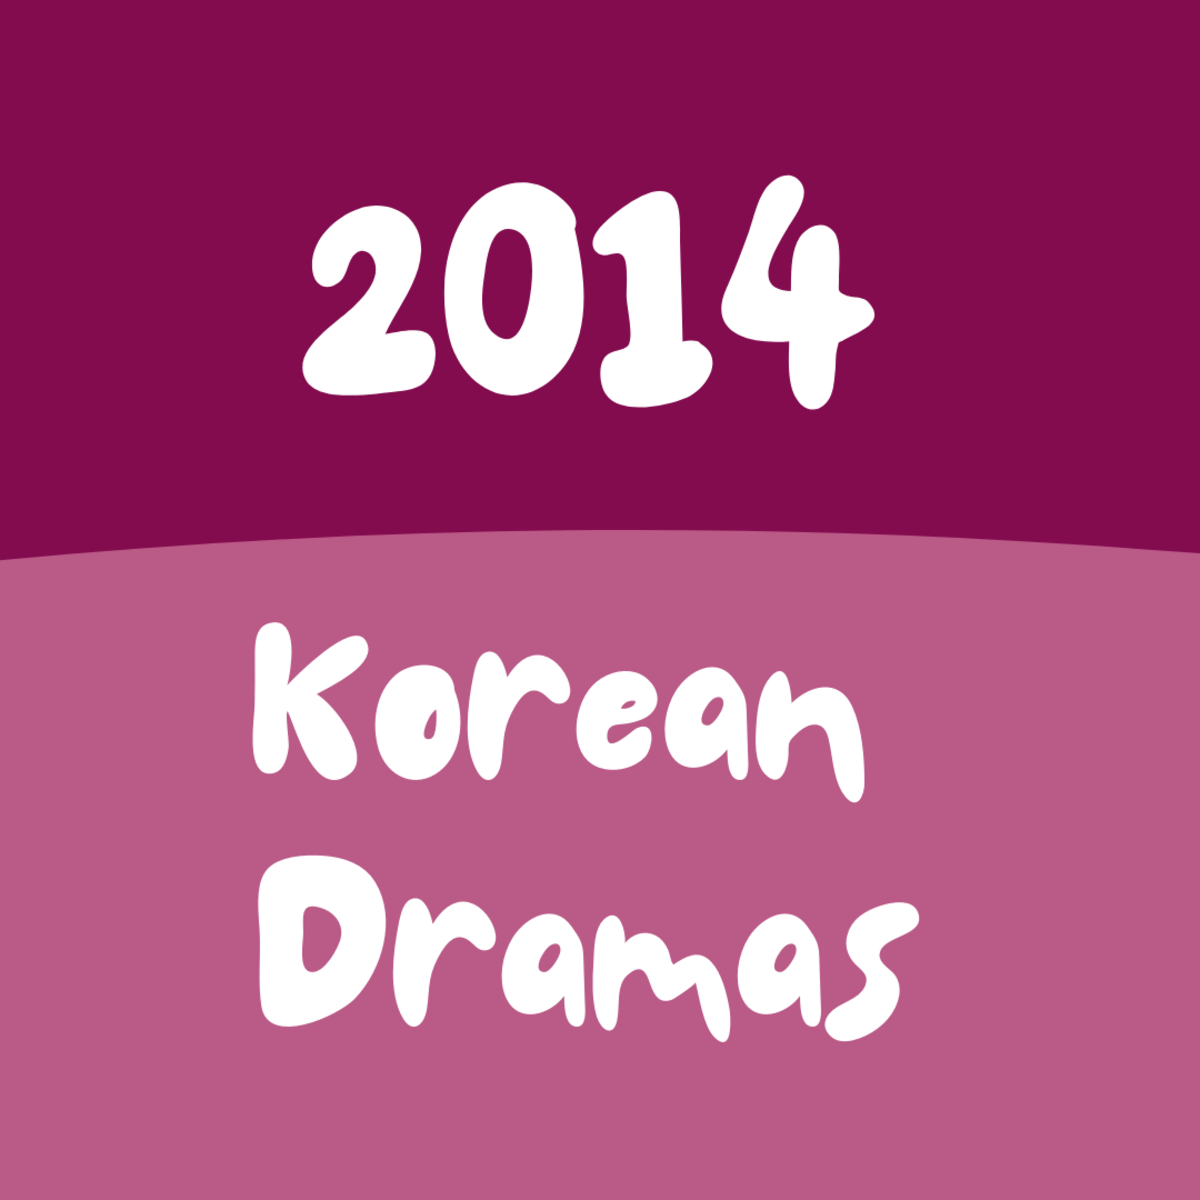 2014 Korean Dramas List